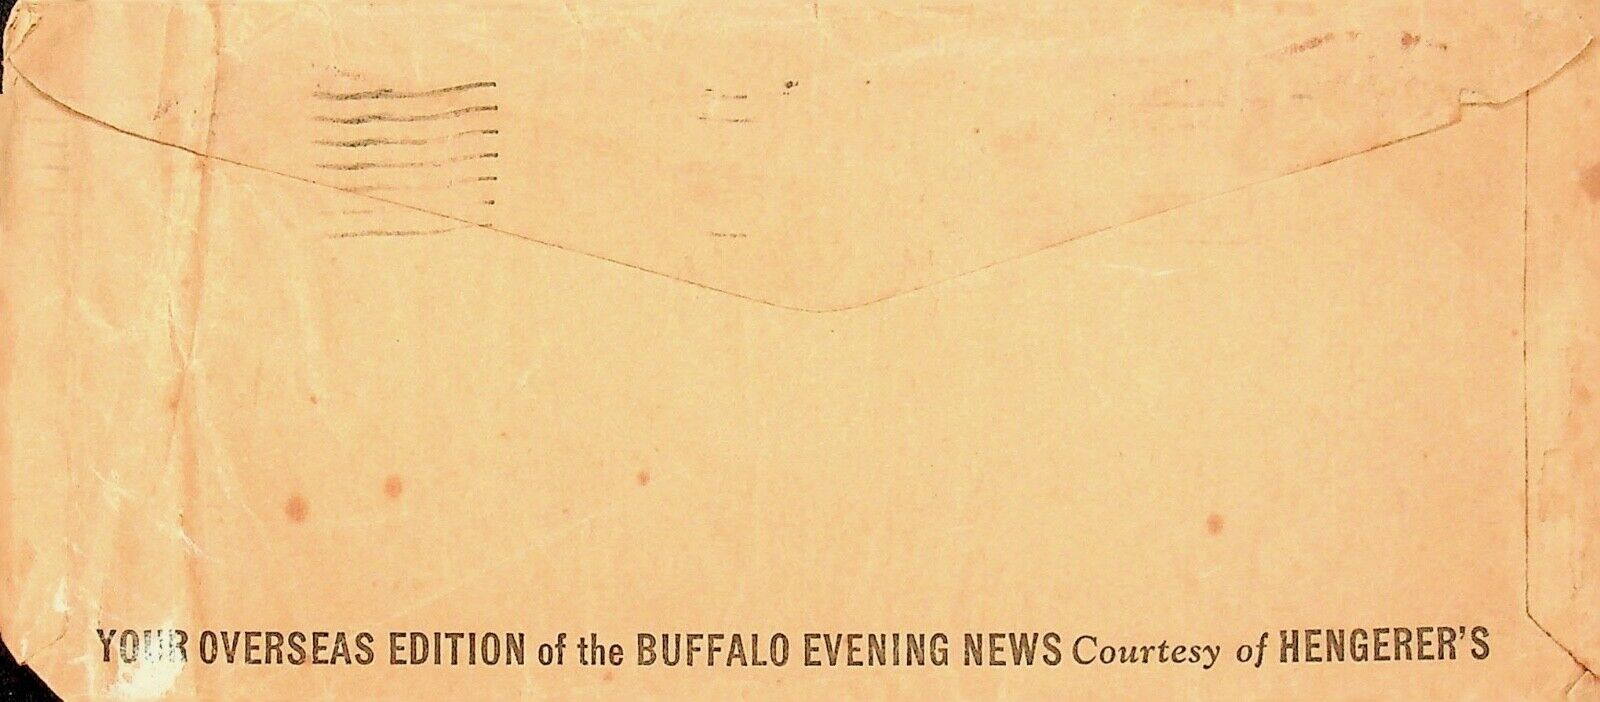 1941 Buffalo Evening News Envelope Used to Send Paper To Serviceman - E11-C